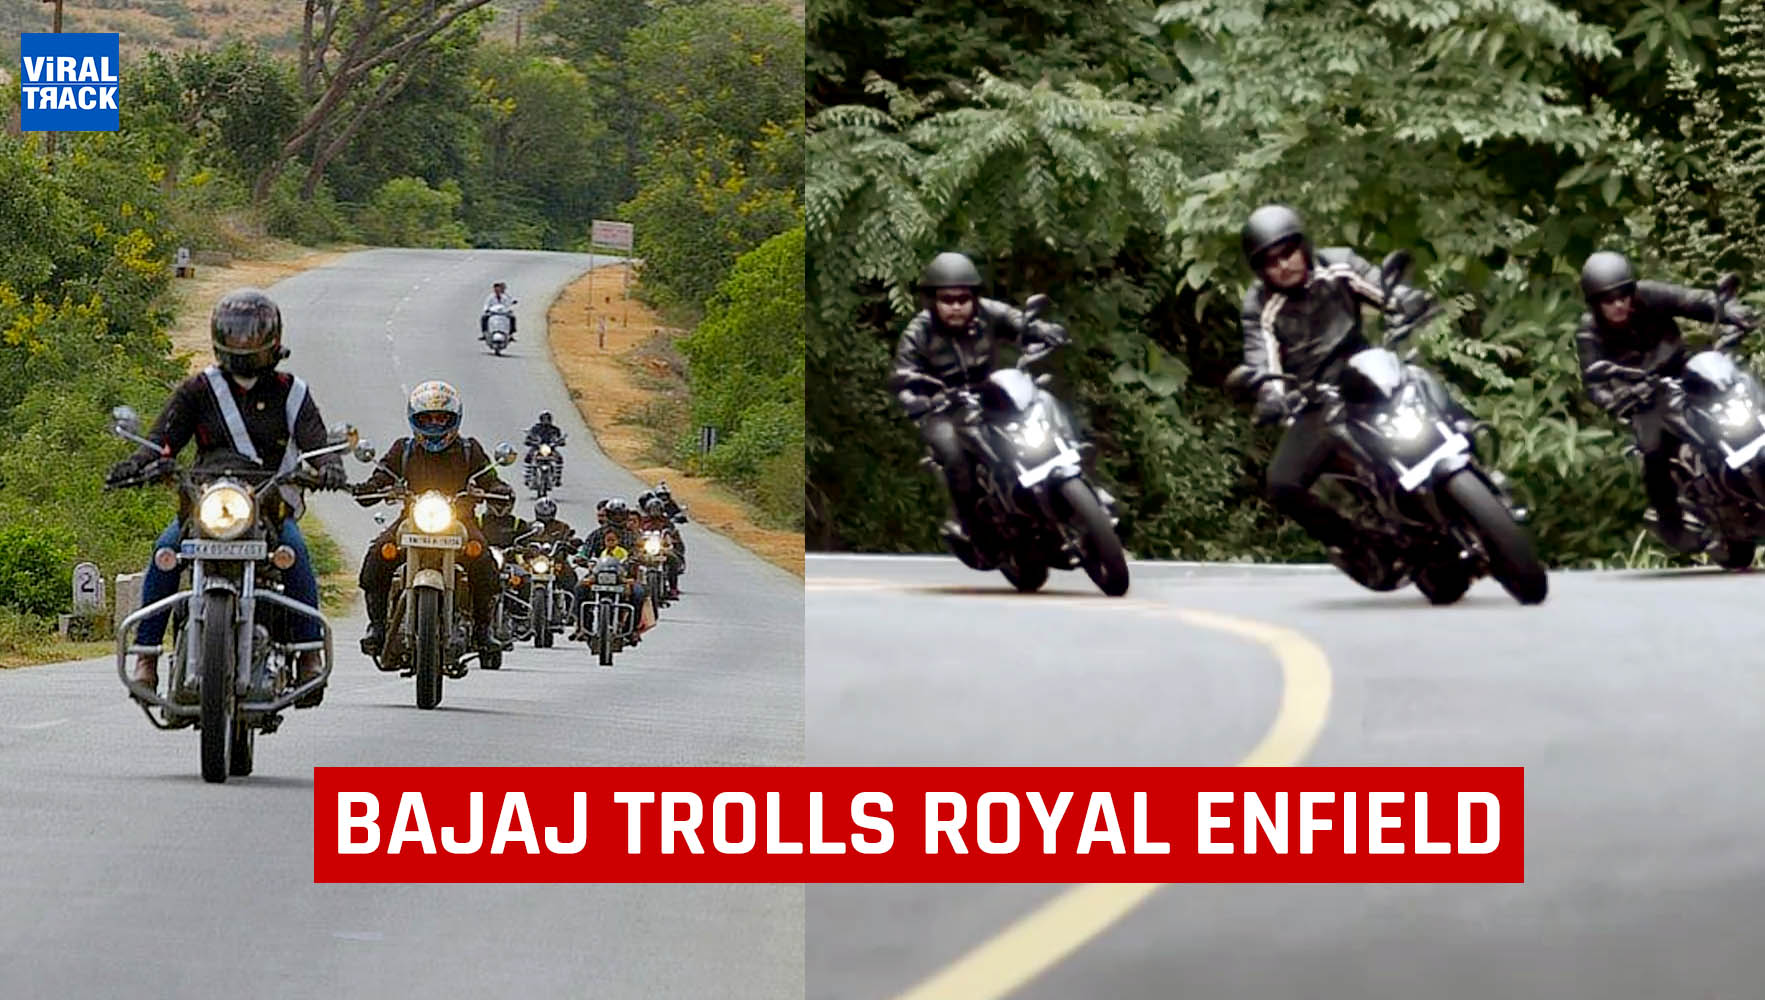 Bajaj dominar trolls royal enfield by commercial ad